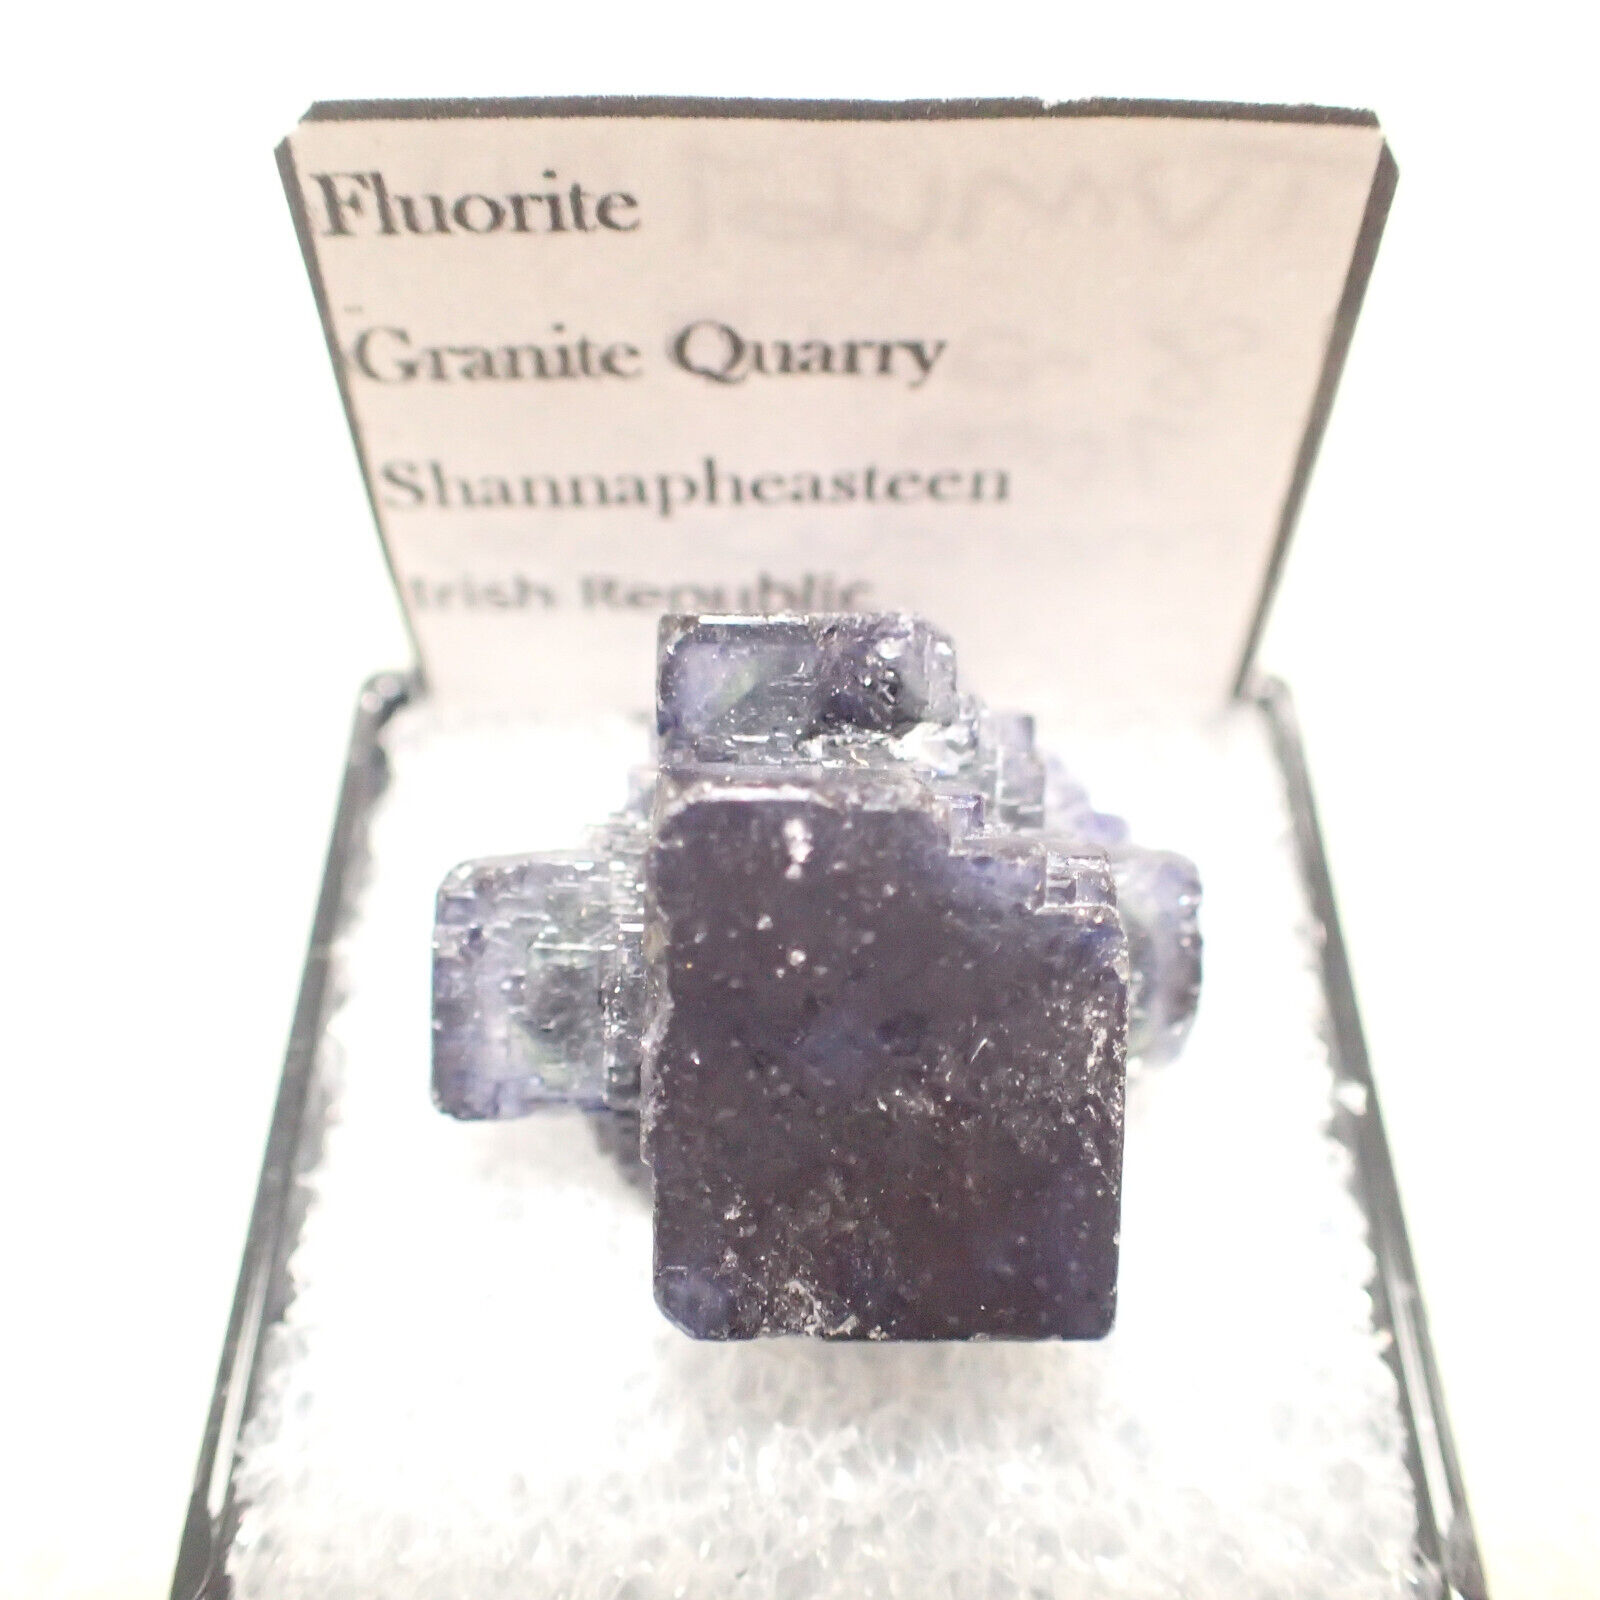 Fluorite, Granite Quarry, Shannapheasteen, Irish Republic, U.K.